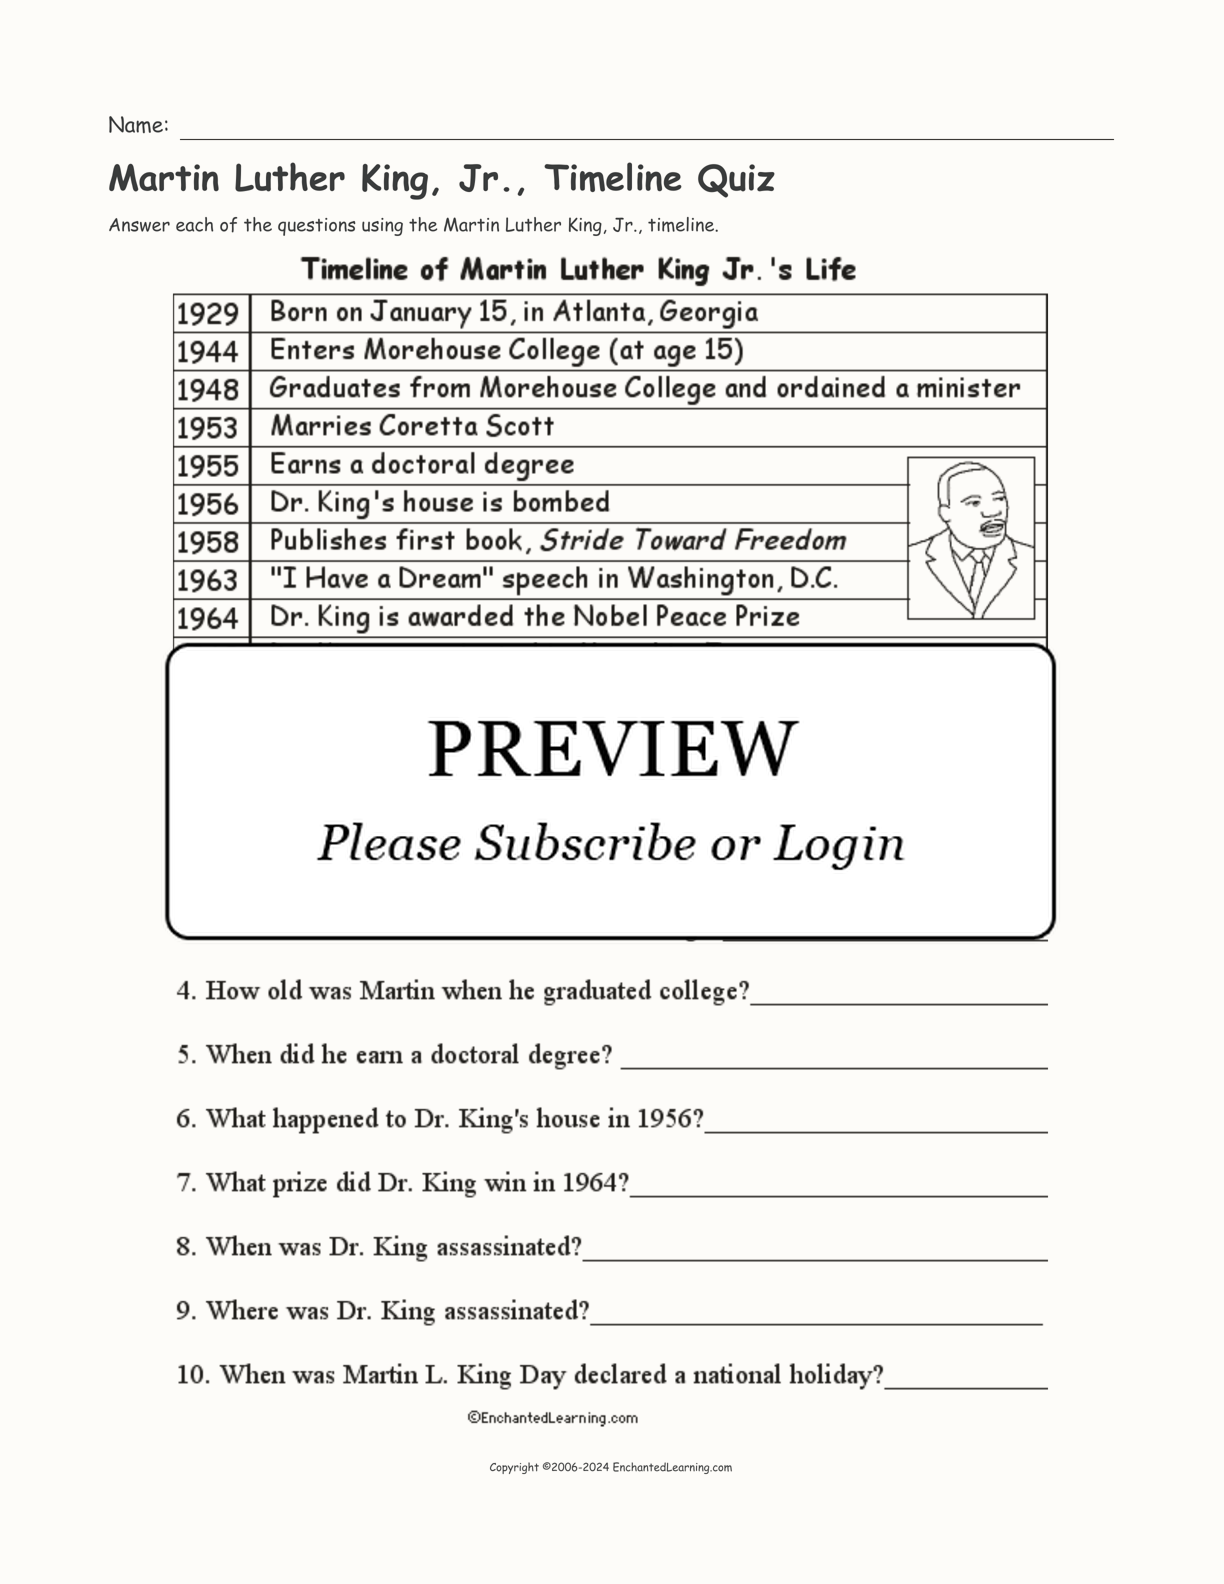 Martin Luther King, Jr., Timeline Quiz interactive worksheet page 1